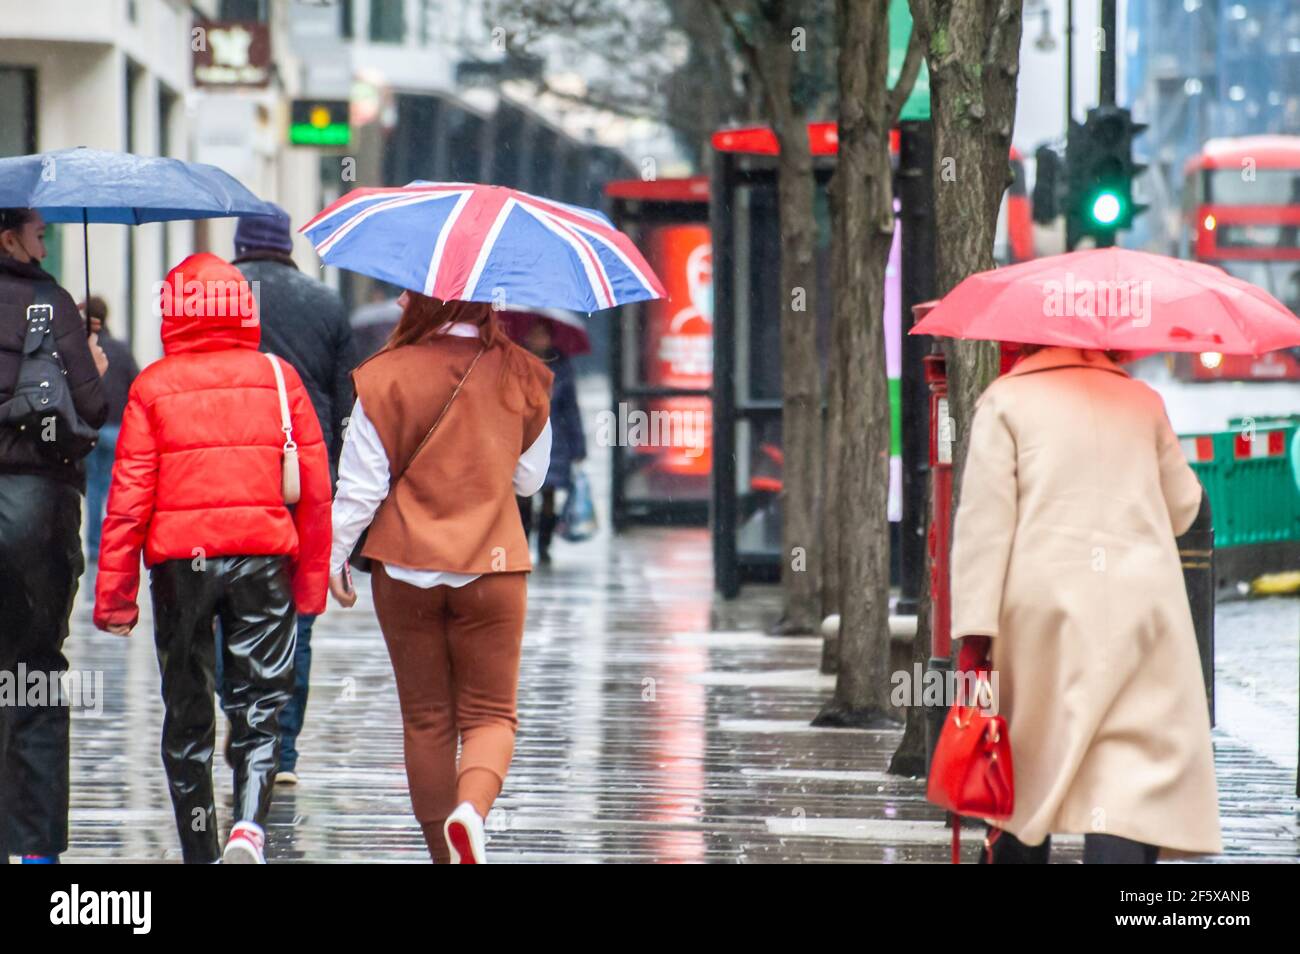 OXFORD STREET, LONDON, ENGLAND- 17th February 2021: Woman with a Union flag umbrella, on a rainy day on Oxford Street Stock Photo